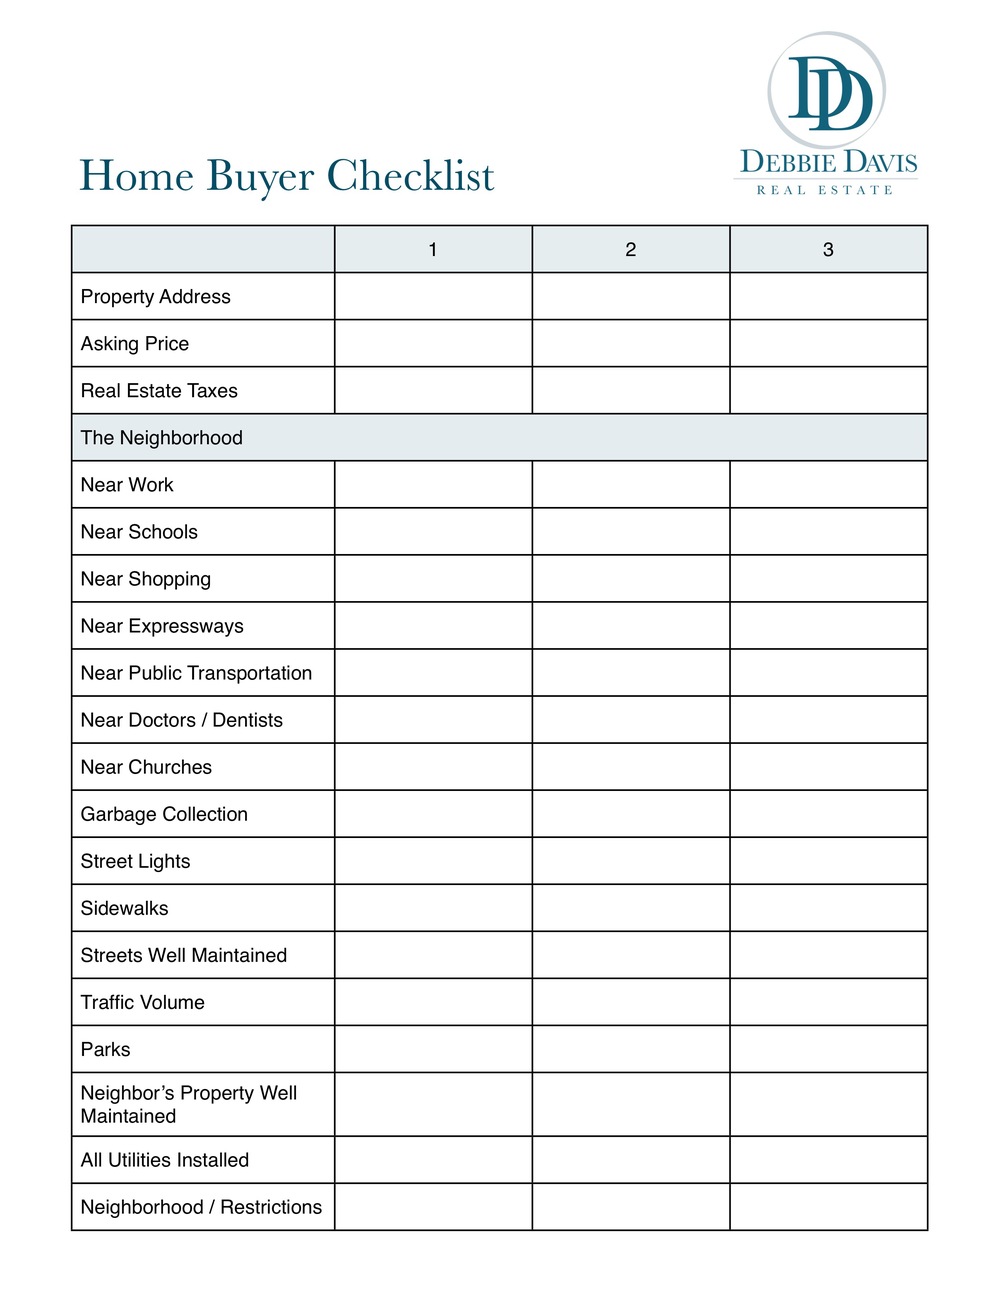 home-buyer-s-checklist-debbie-davis-real-estate